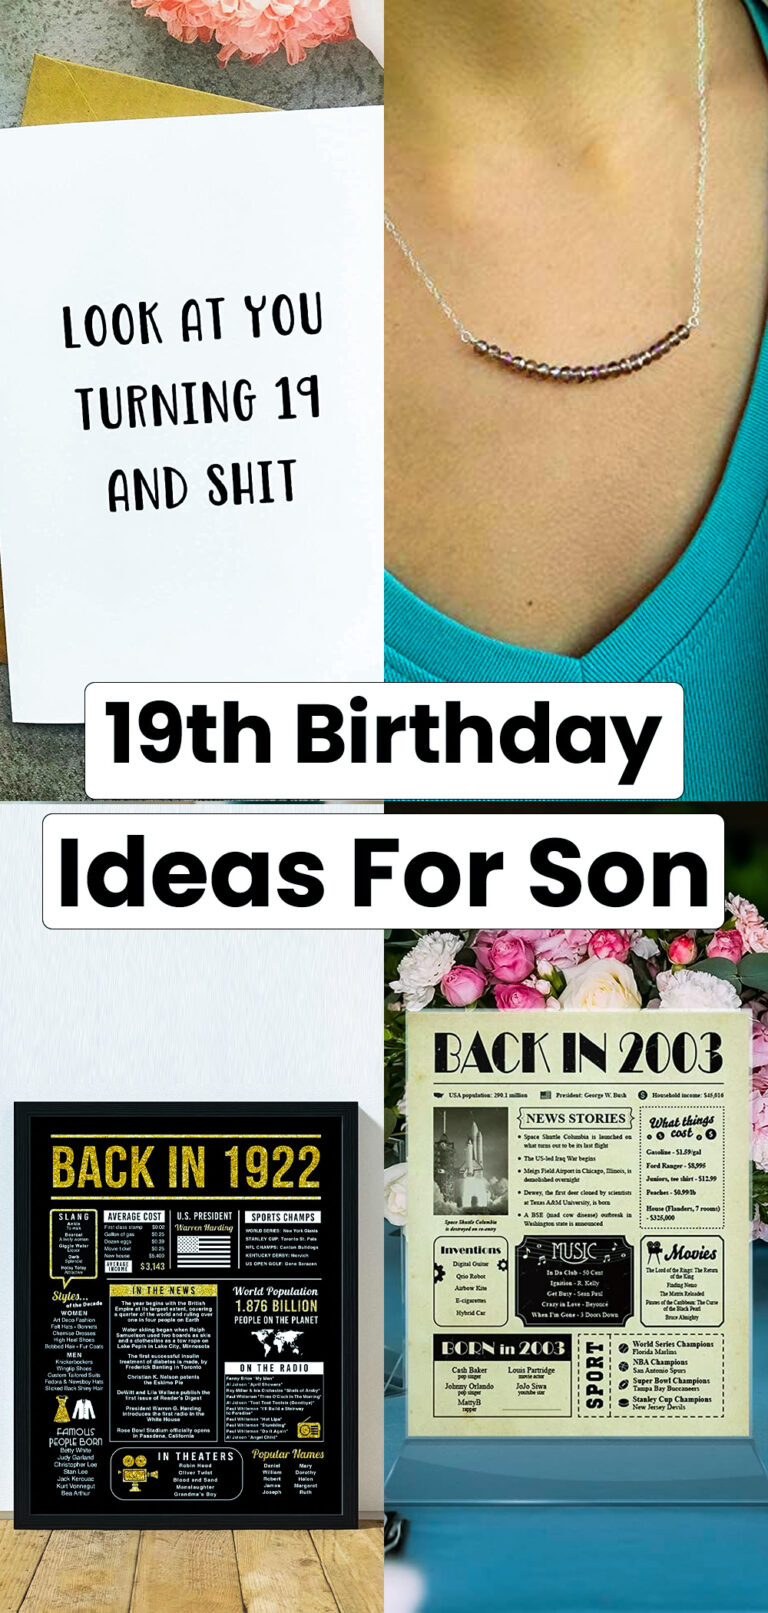 19th Birthday Ideas for Son